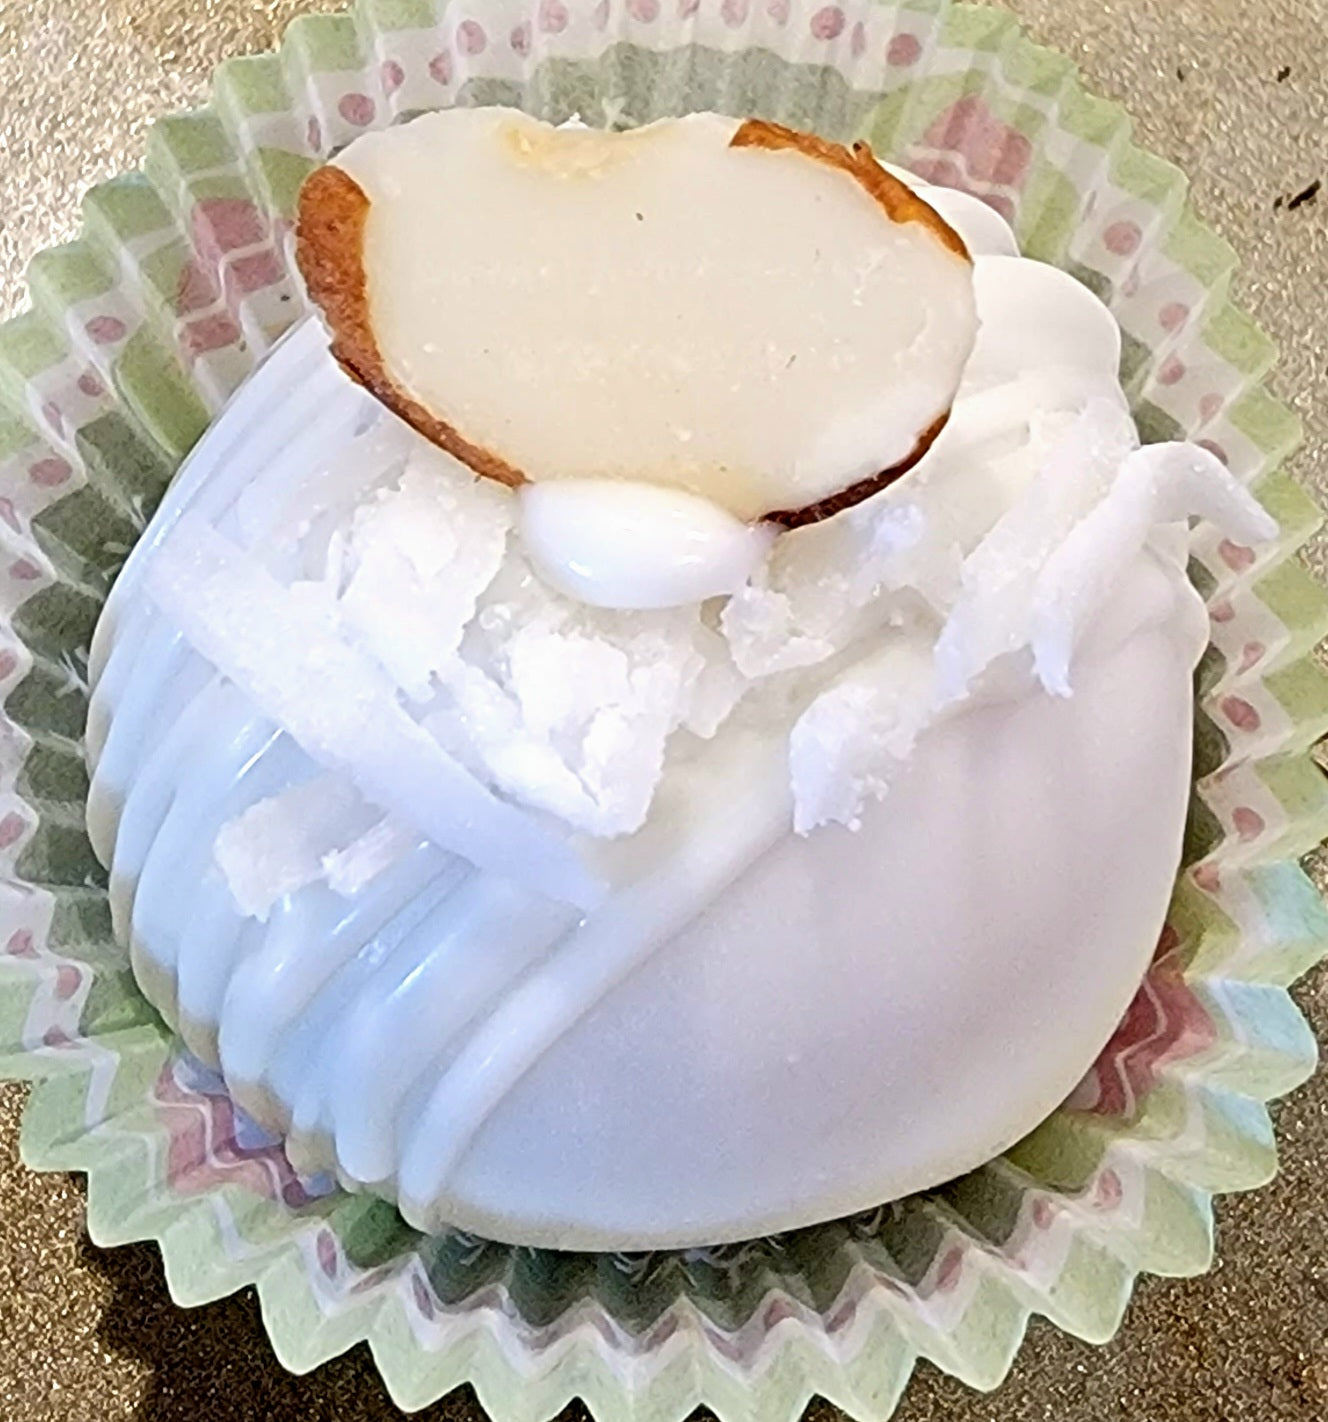 Gourmet Cake Truffles - Holidays, Birthdays, Anniversaries, Weddings